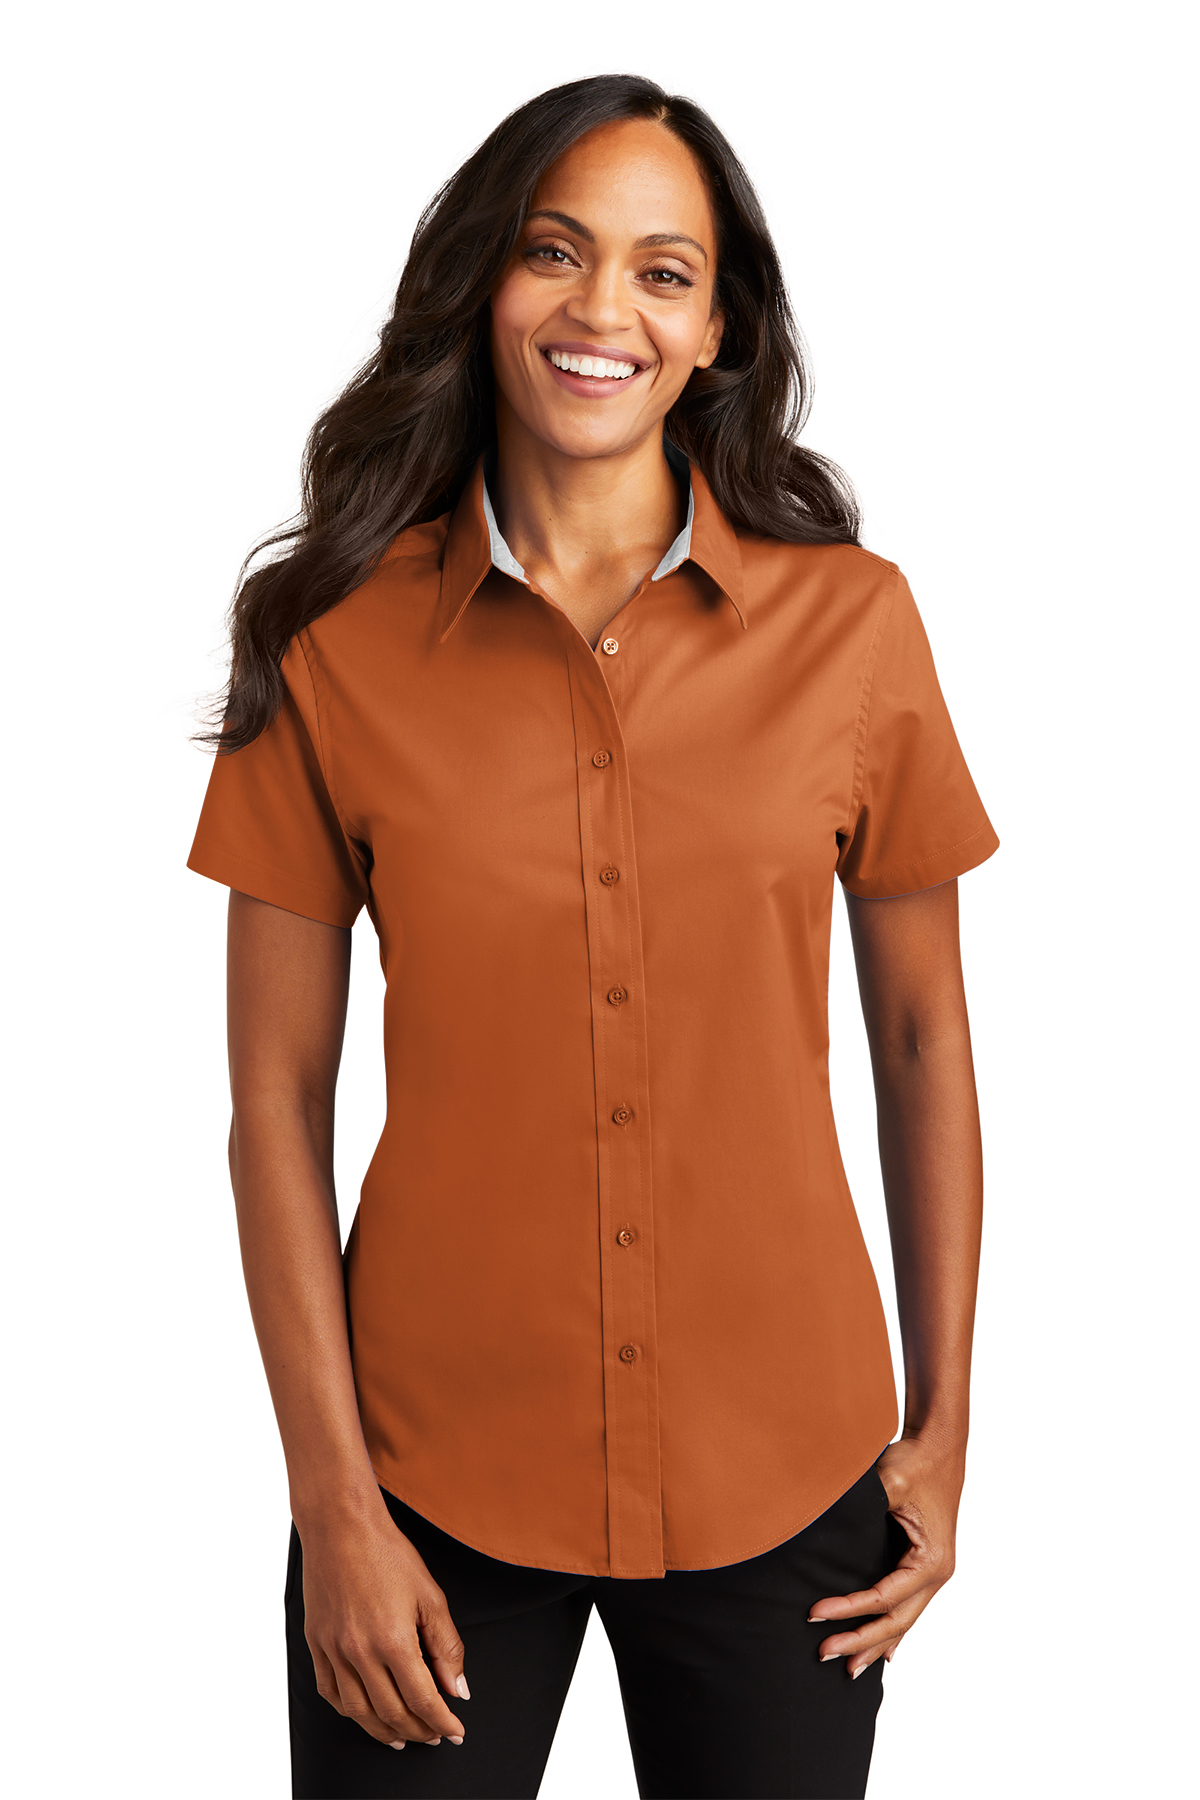 | Port Short Authority Ladies Authority Sleeve Care Easy Port | Shirt Product